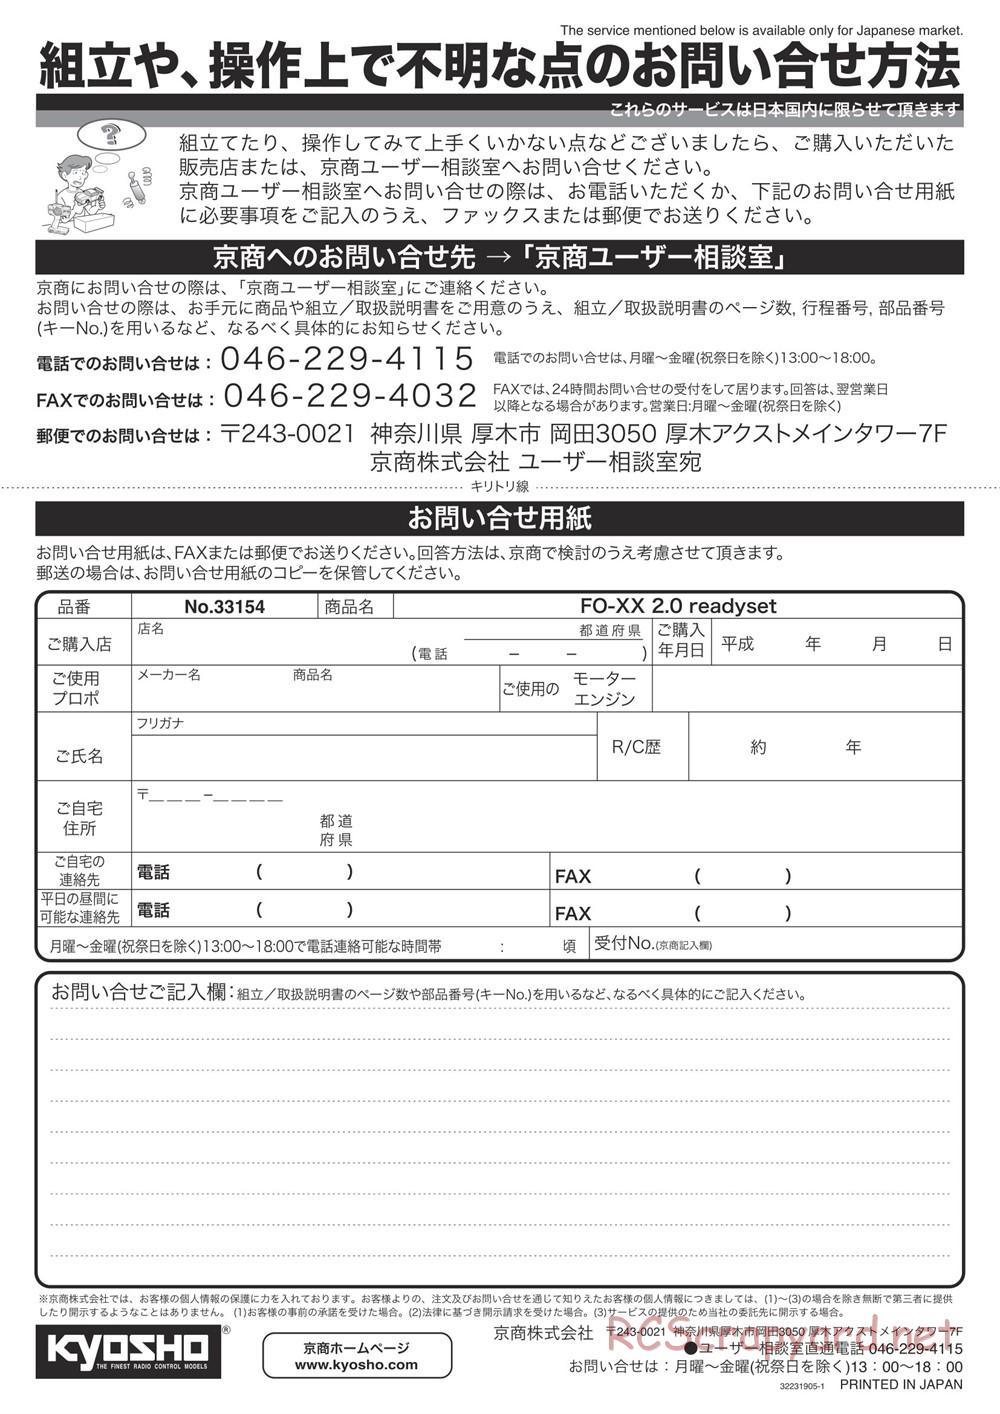 Kyosho - FO-XX 2.0 - Manual - Page 51